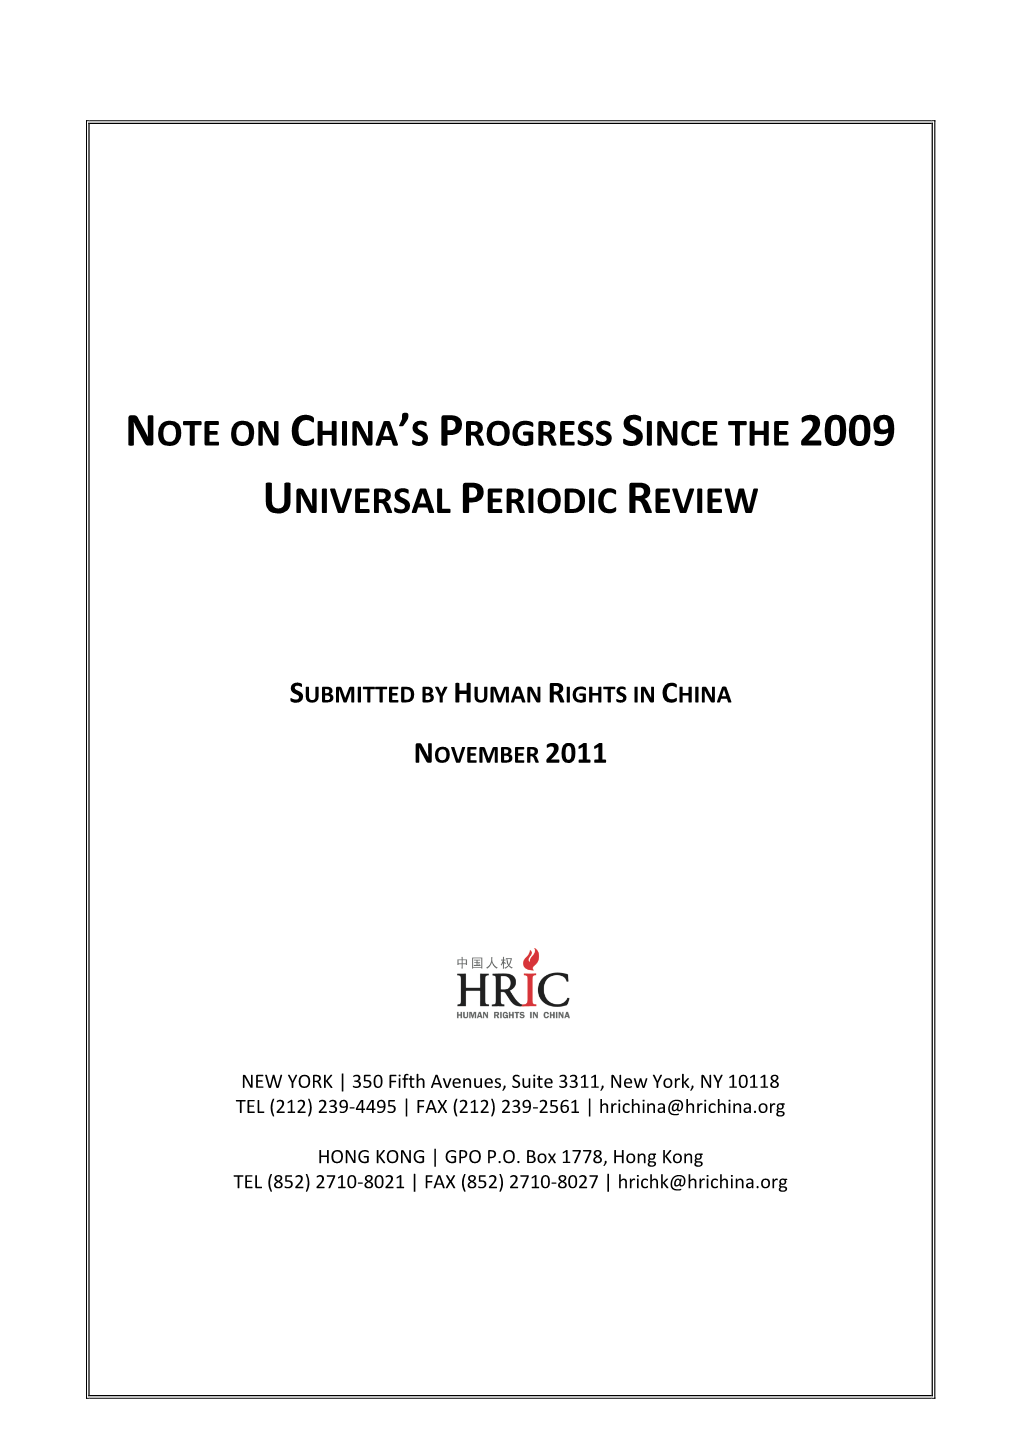 Note on China's Progress Since the 2009 Universal